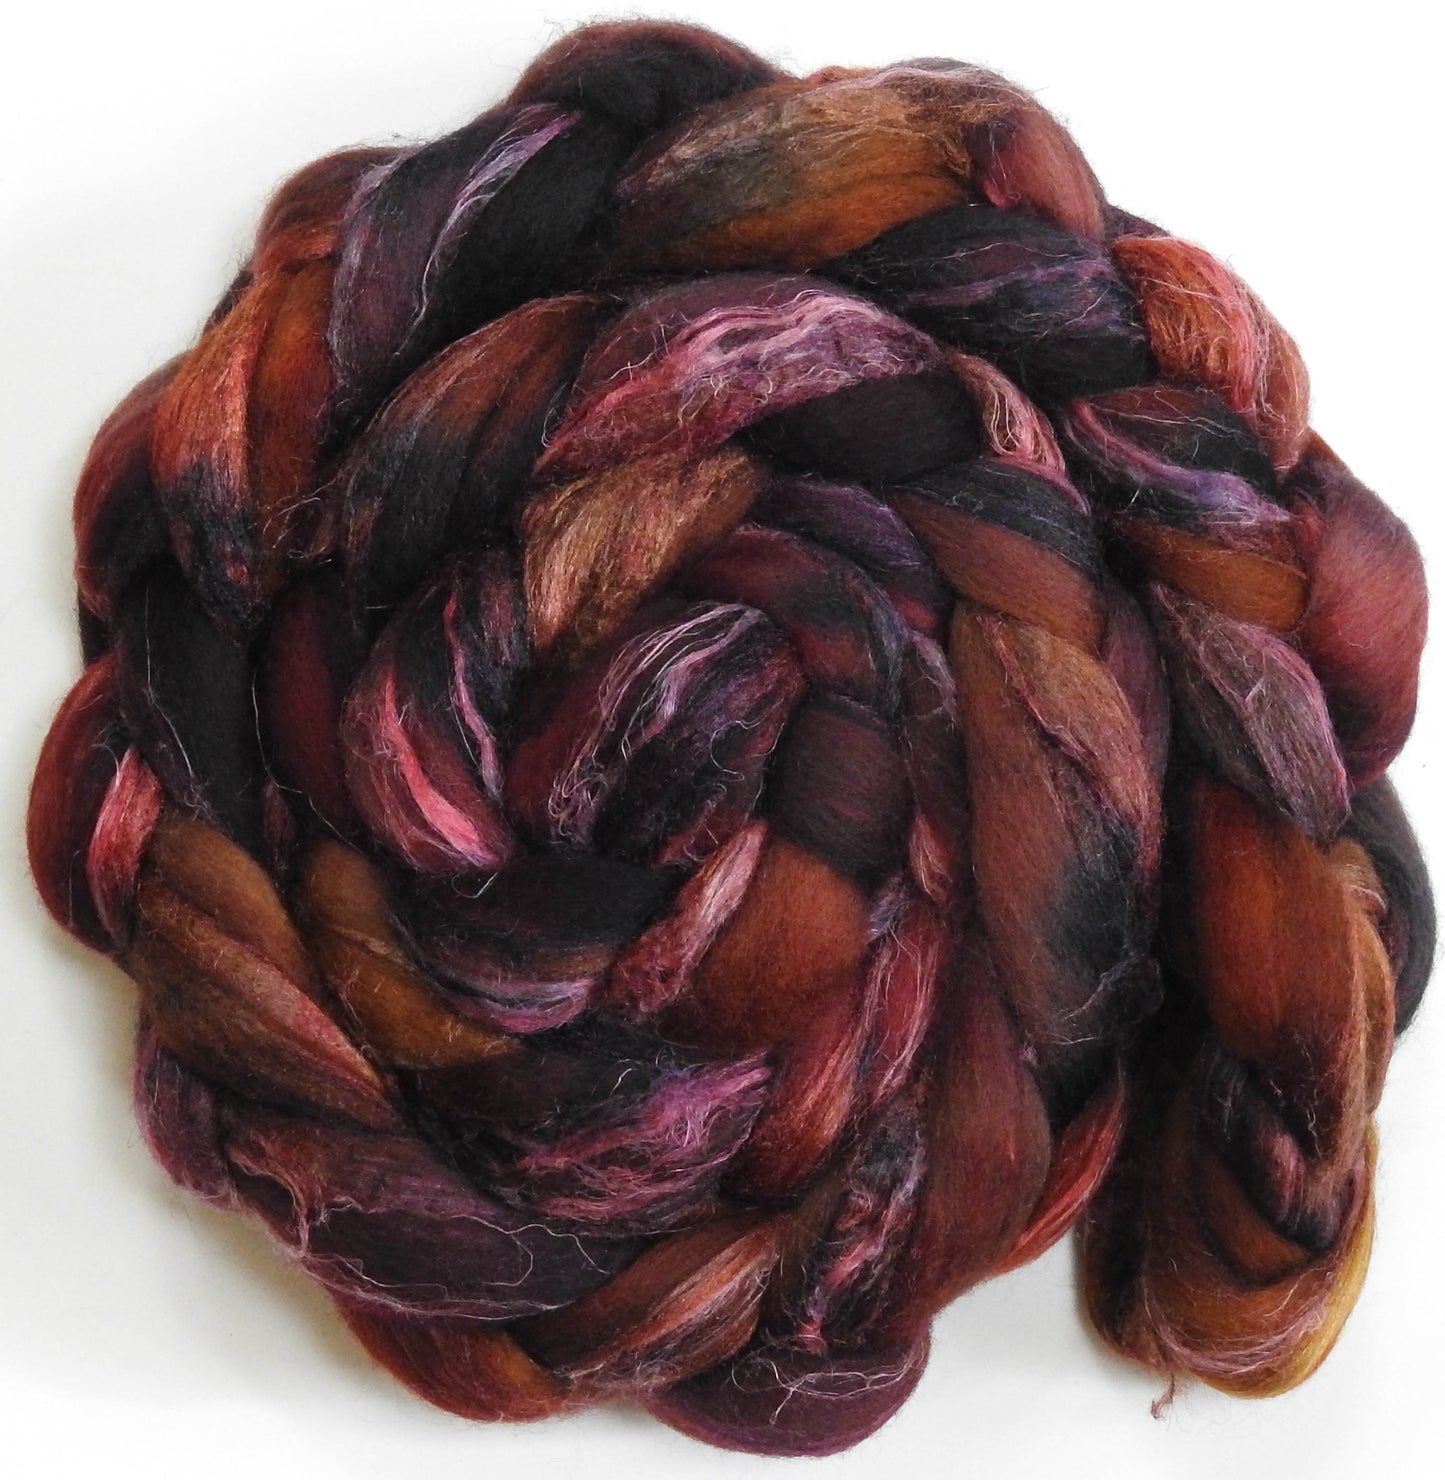 Padauk (5.9 oz) - Merino/ Tussah Silk/ Natural Flax (50/25/25)